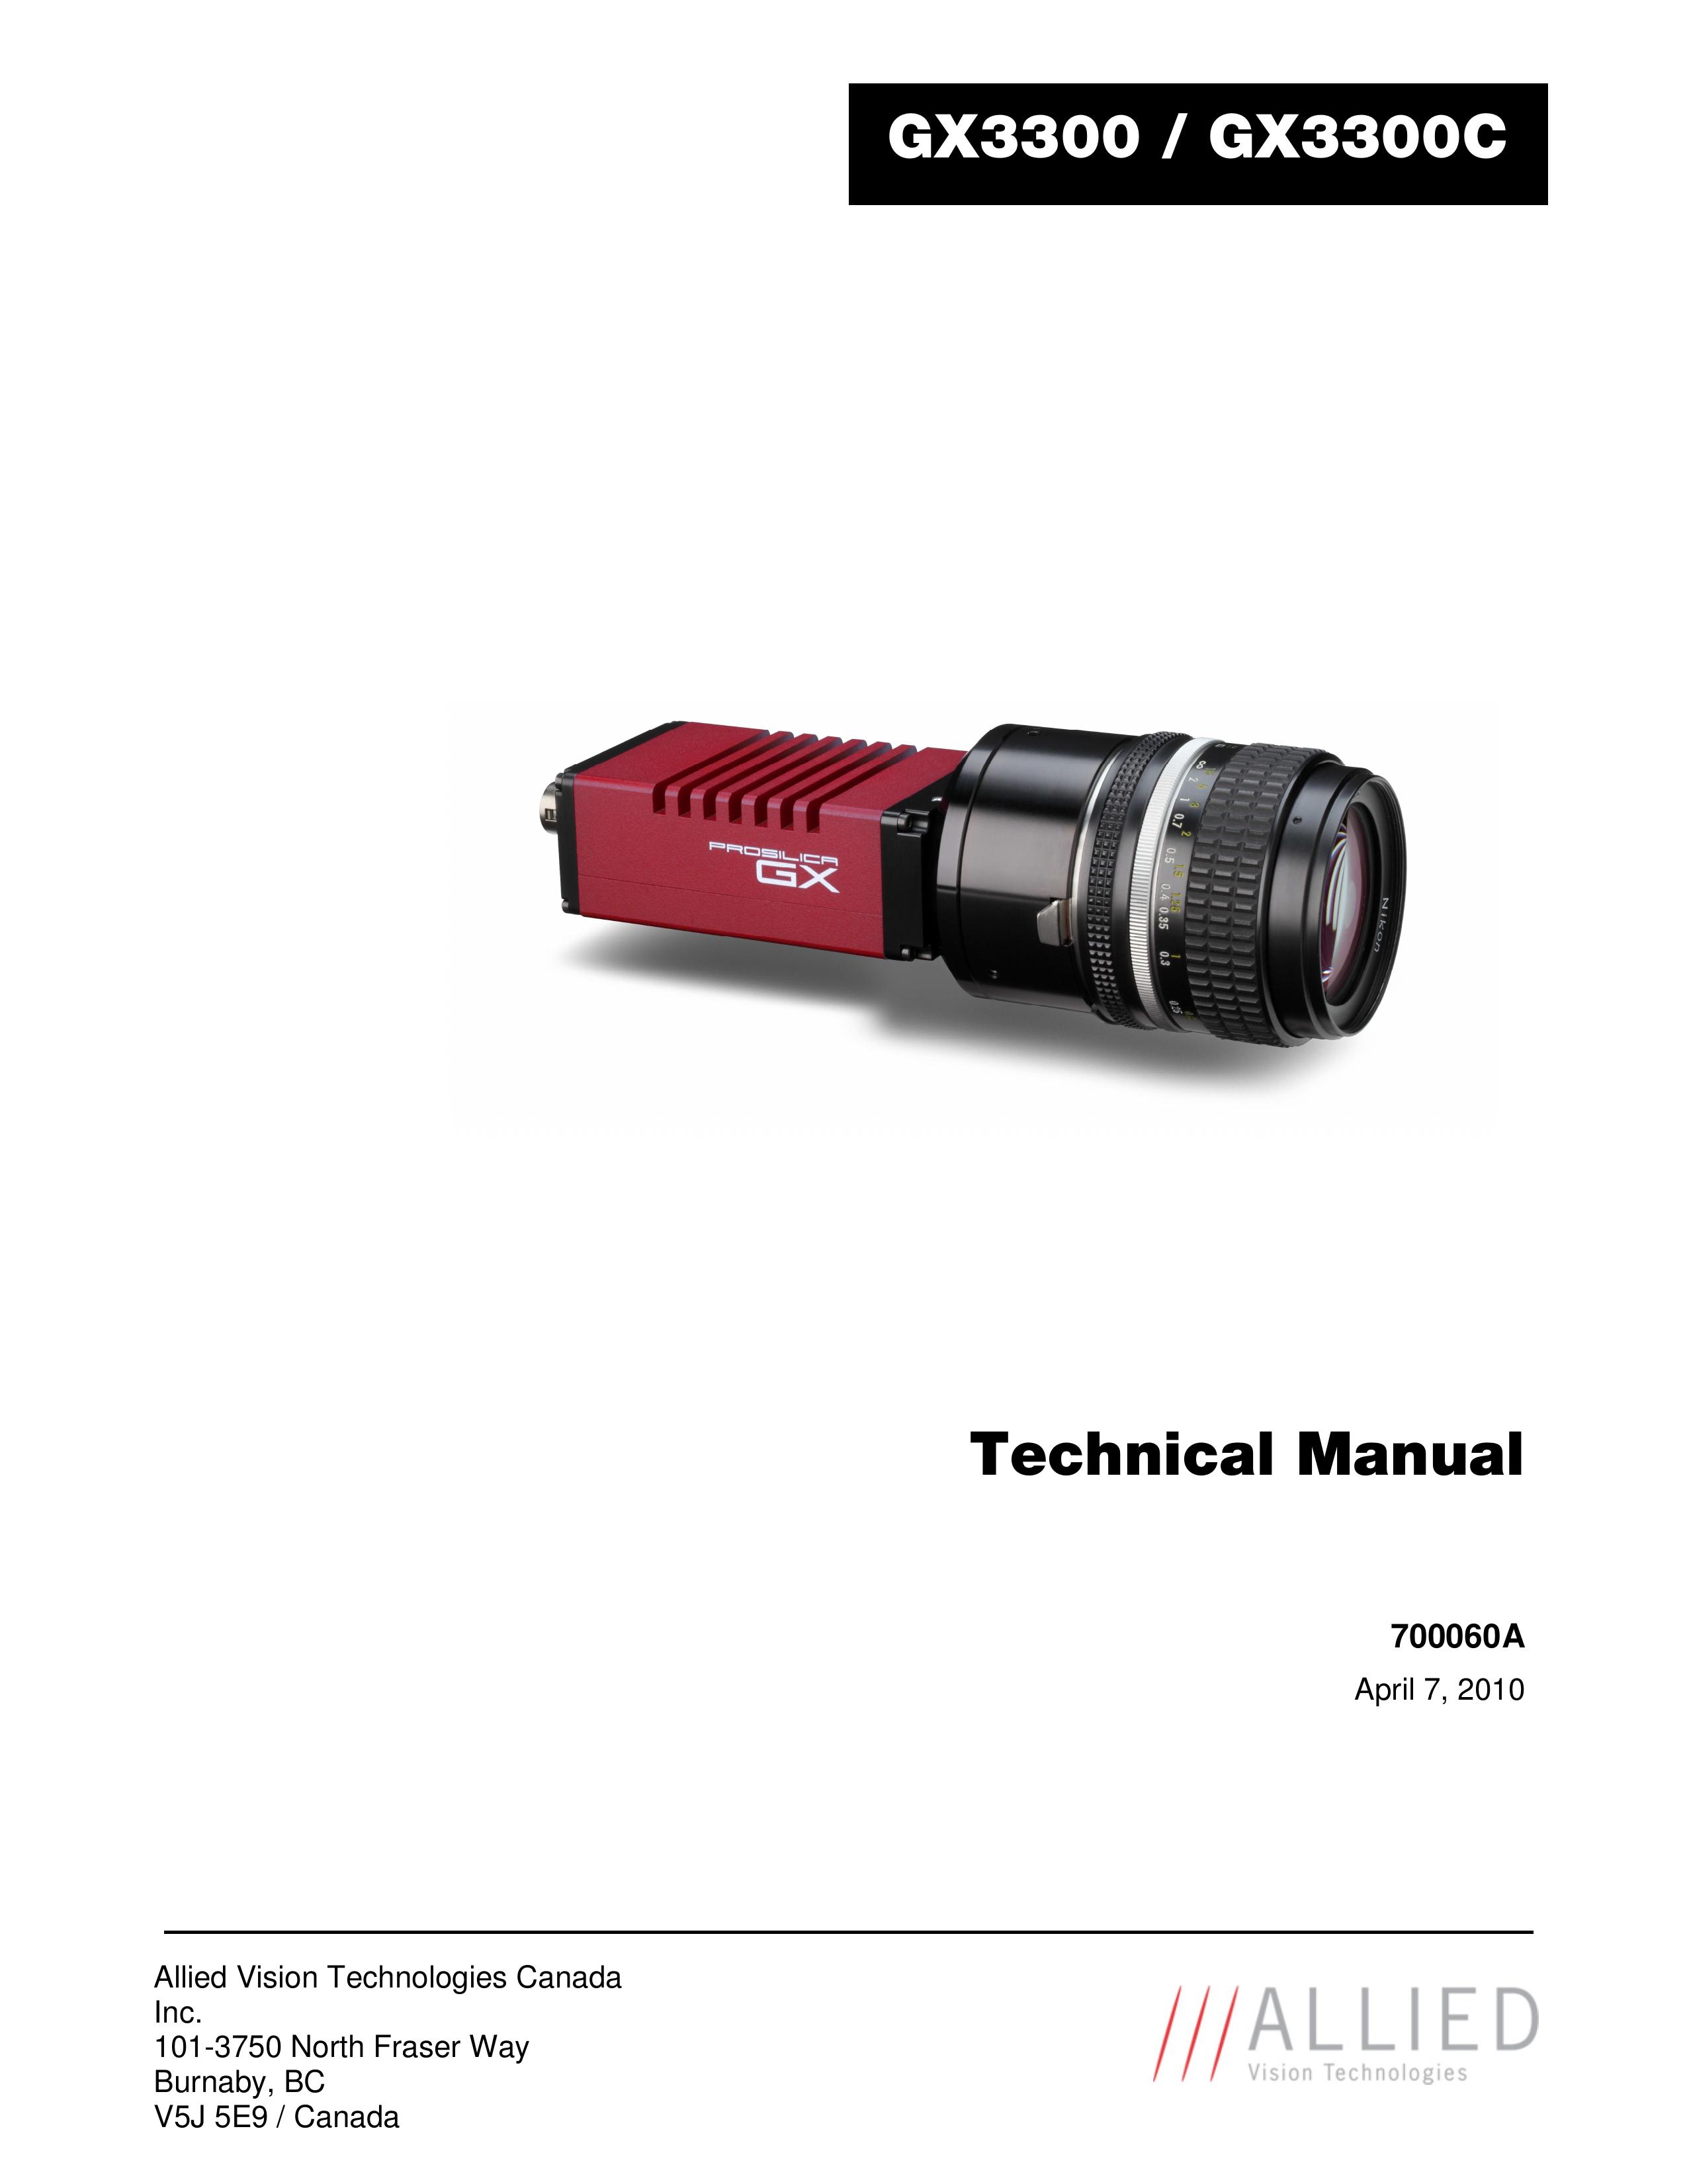 Allied International GX3300 Digital Camera User Manual (Page 1)